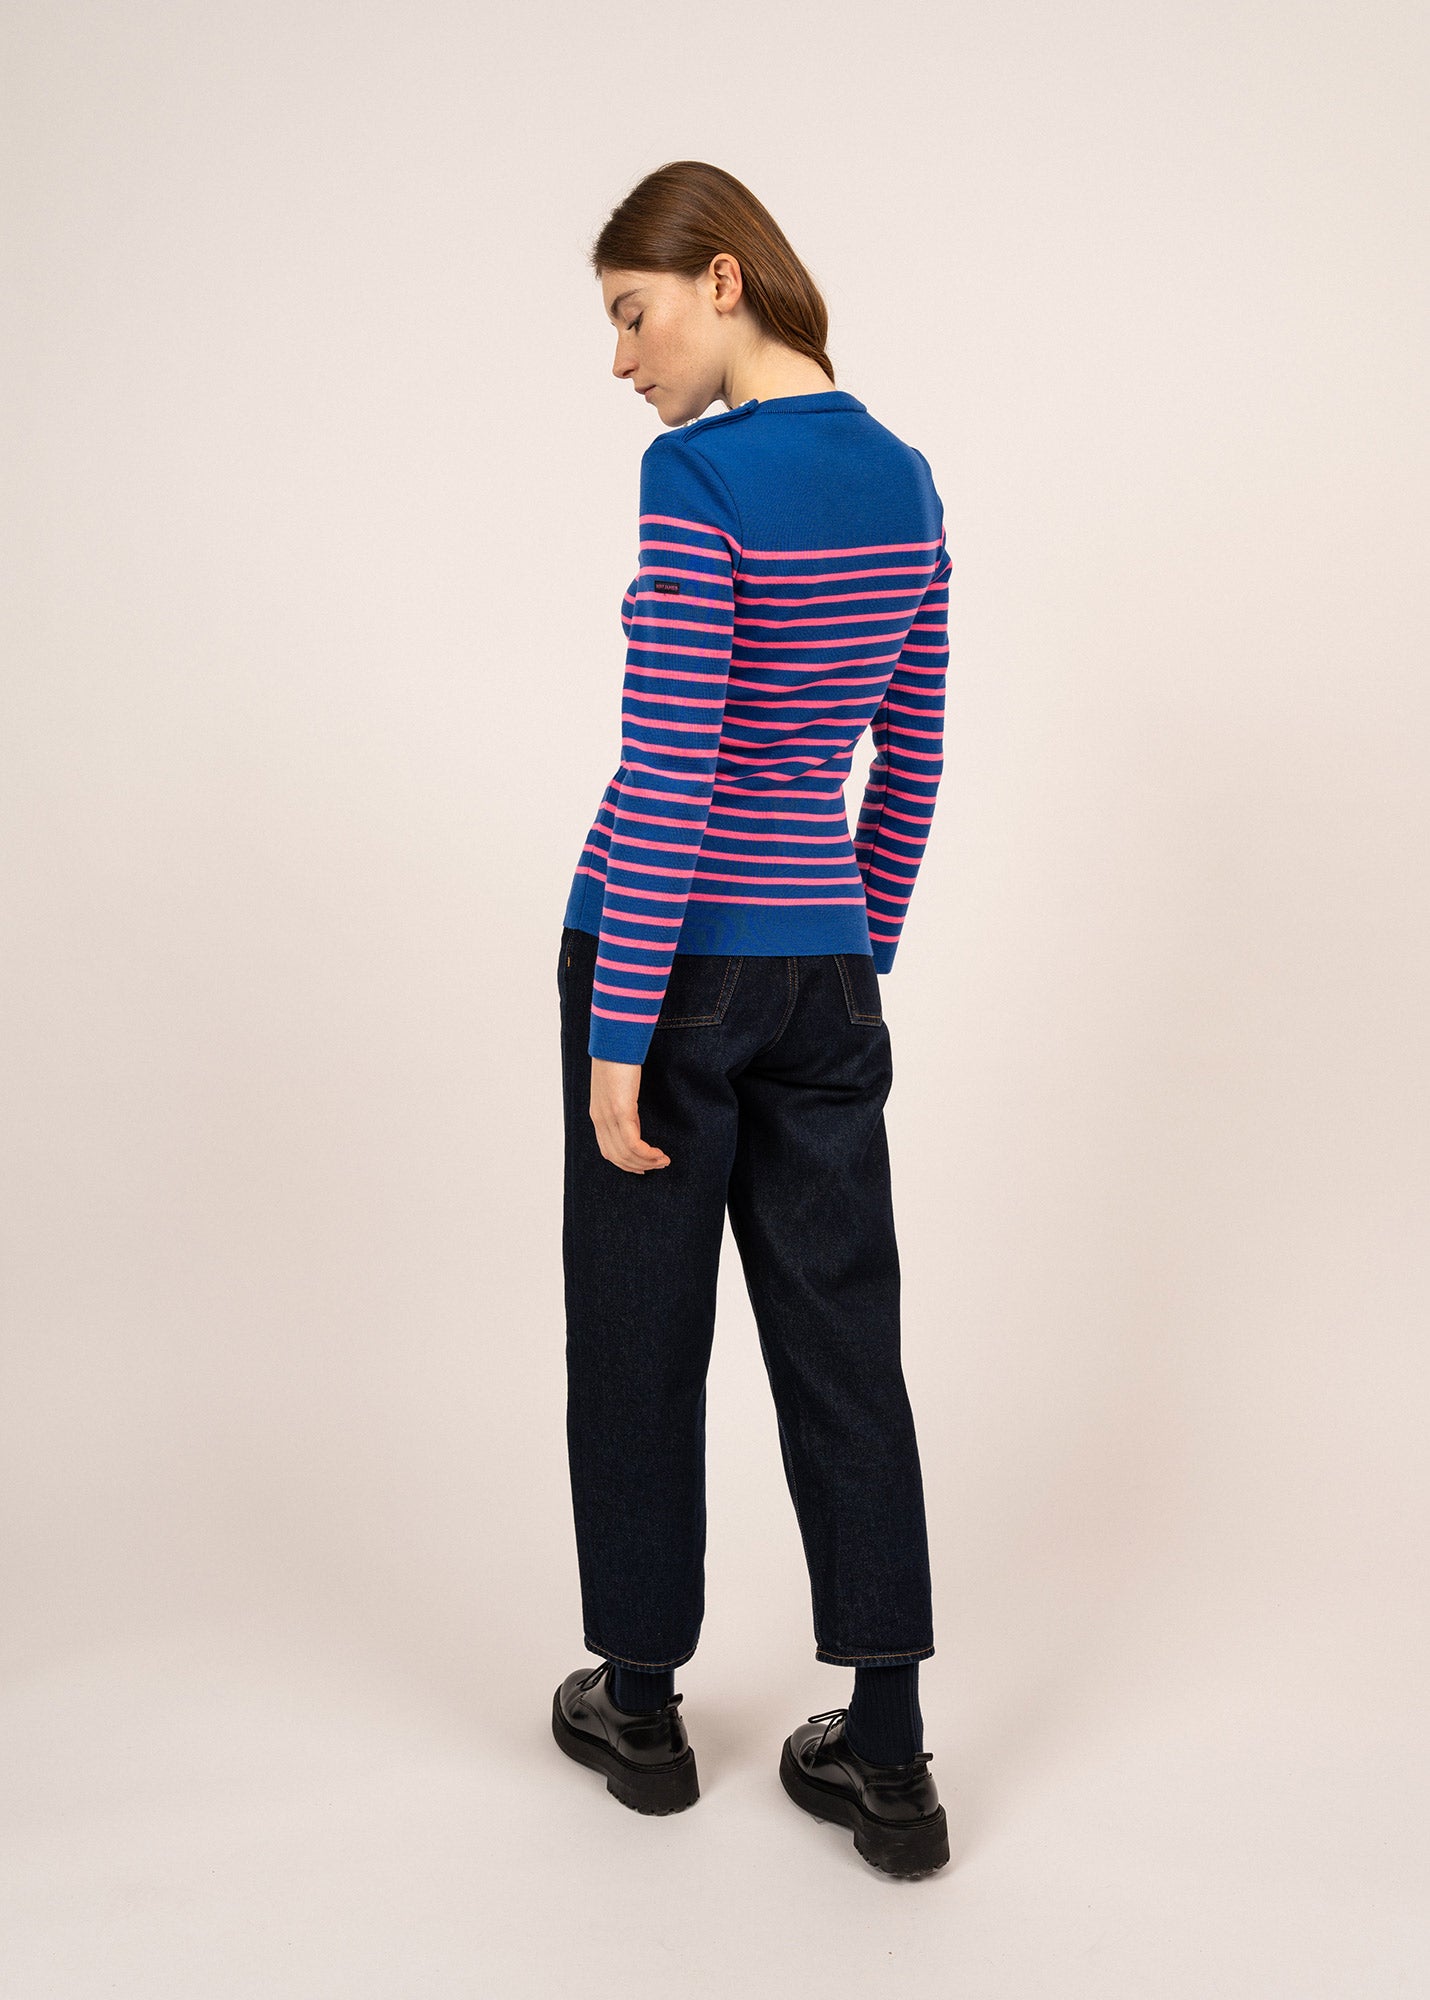 Saint James Maree Stripe Sweater